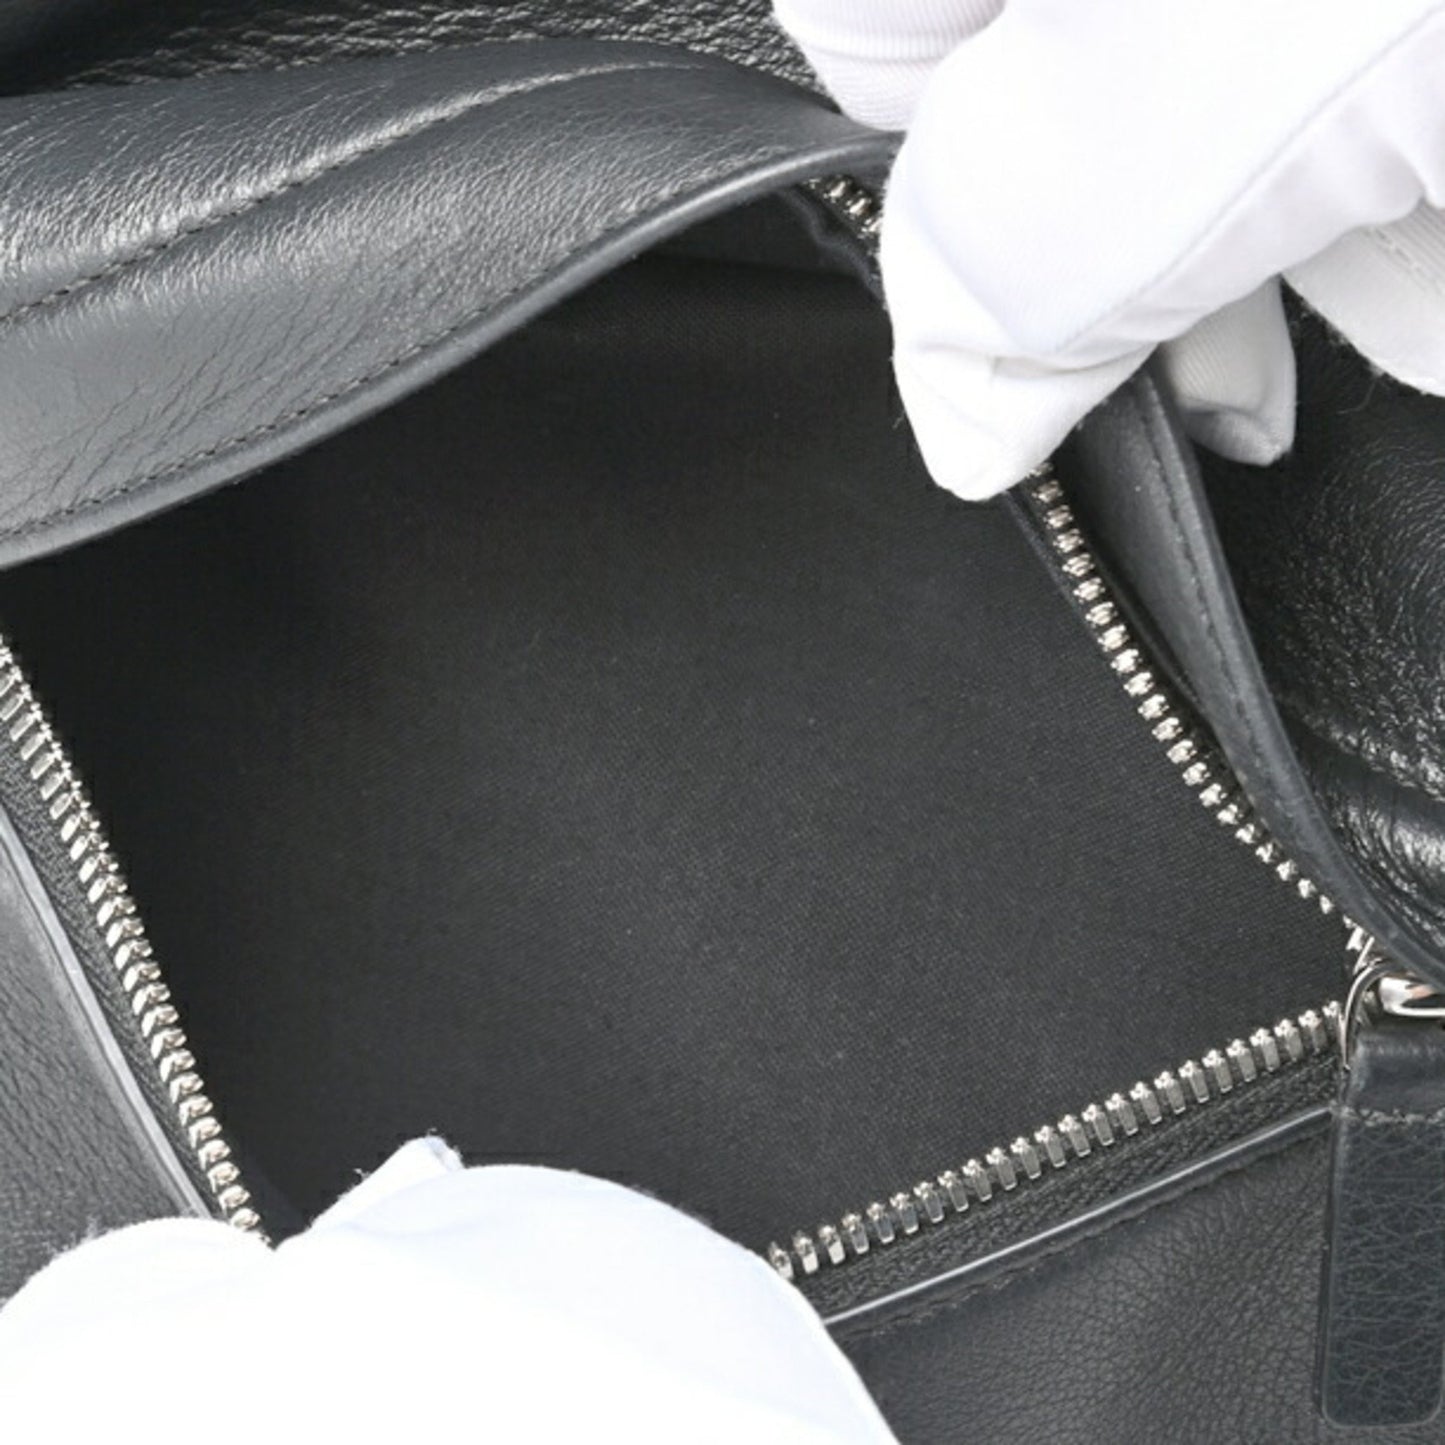 Balenciaga Unisex Sophisticated Everyday Calfskin Bag in Black